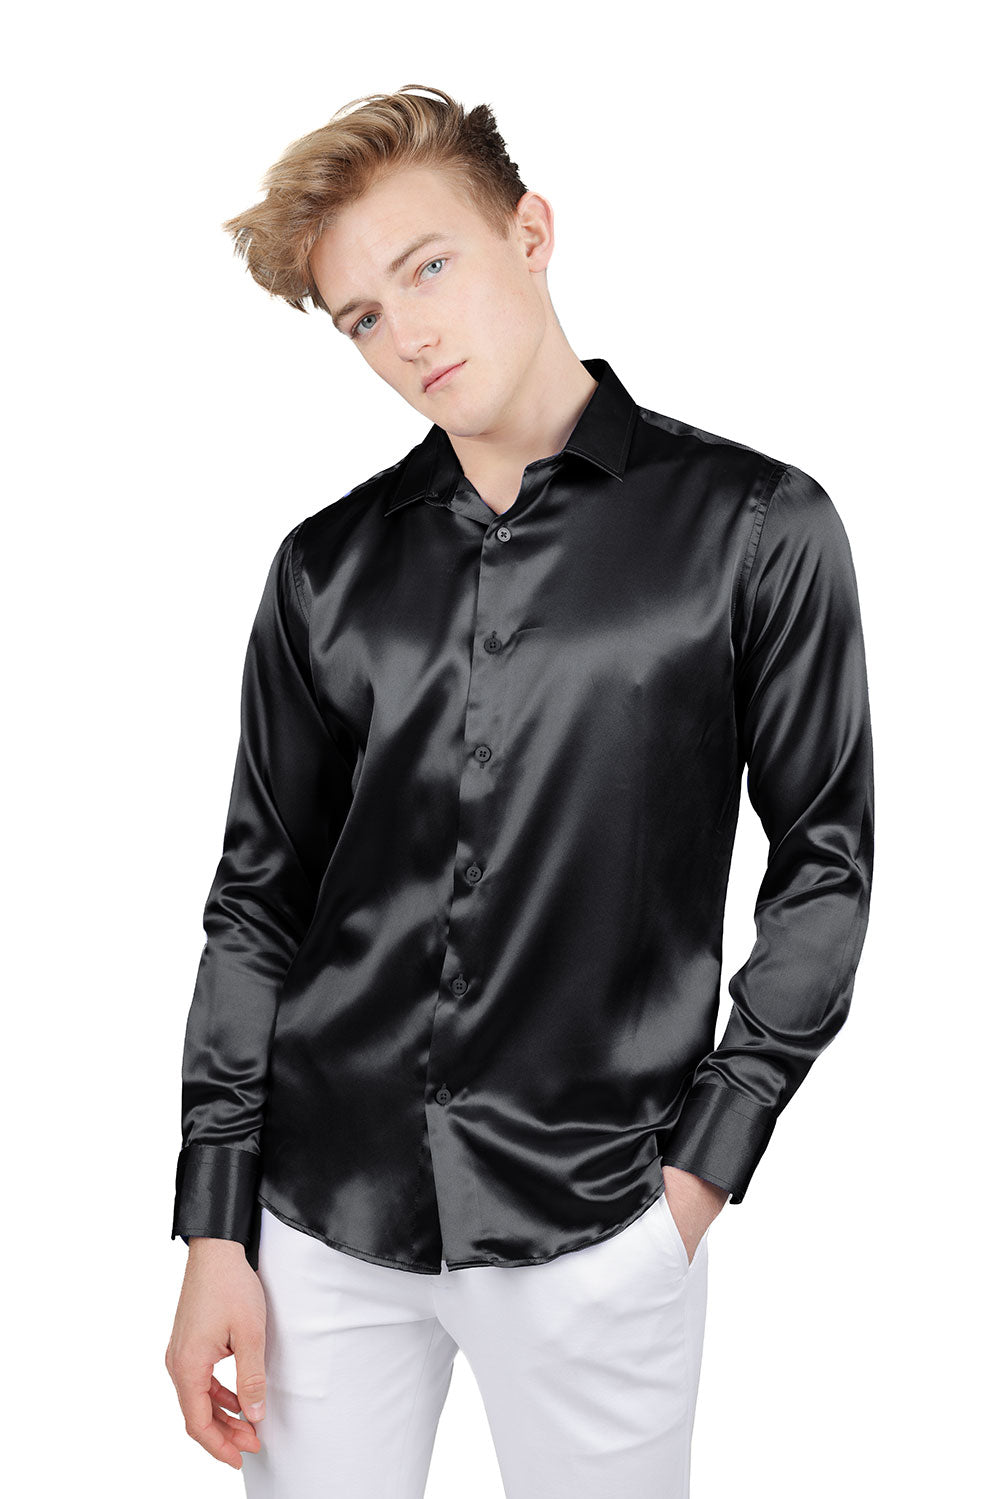 BARABAS Mens Luxury Shiny Long Sleeve Button Down Metallic Shirts B312 Black